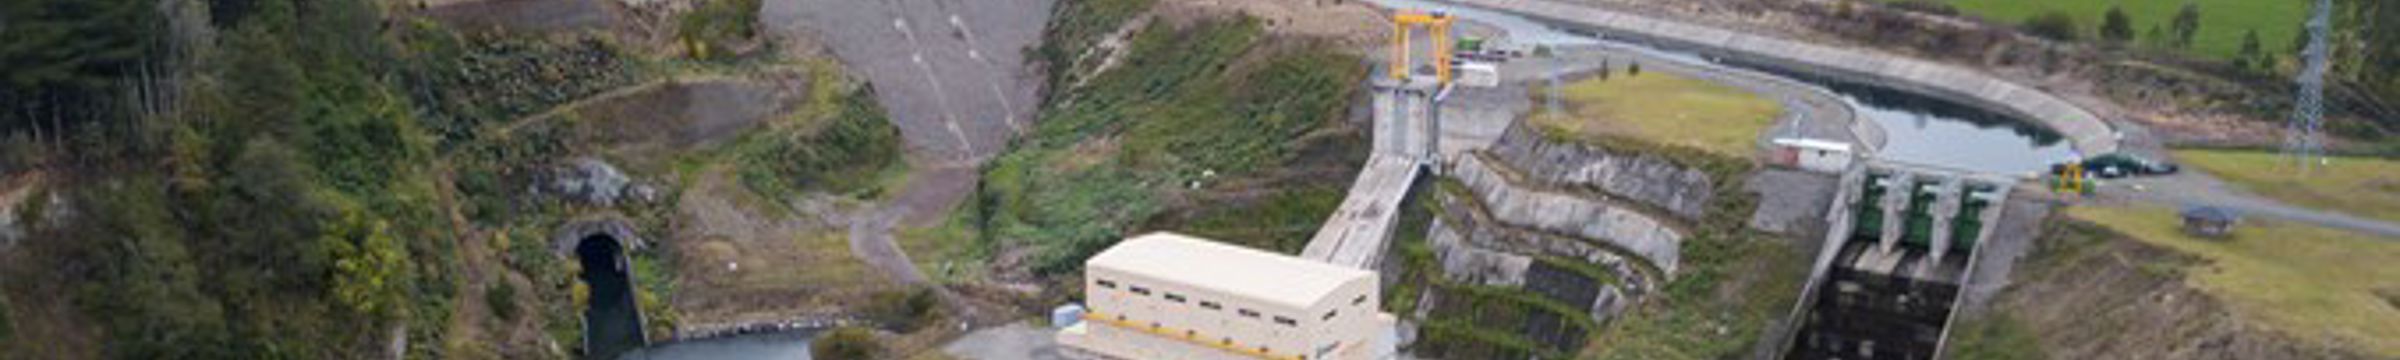 Vista aérea de central hidroeléctrica Rucatayo de Statkraft